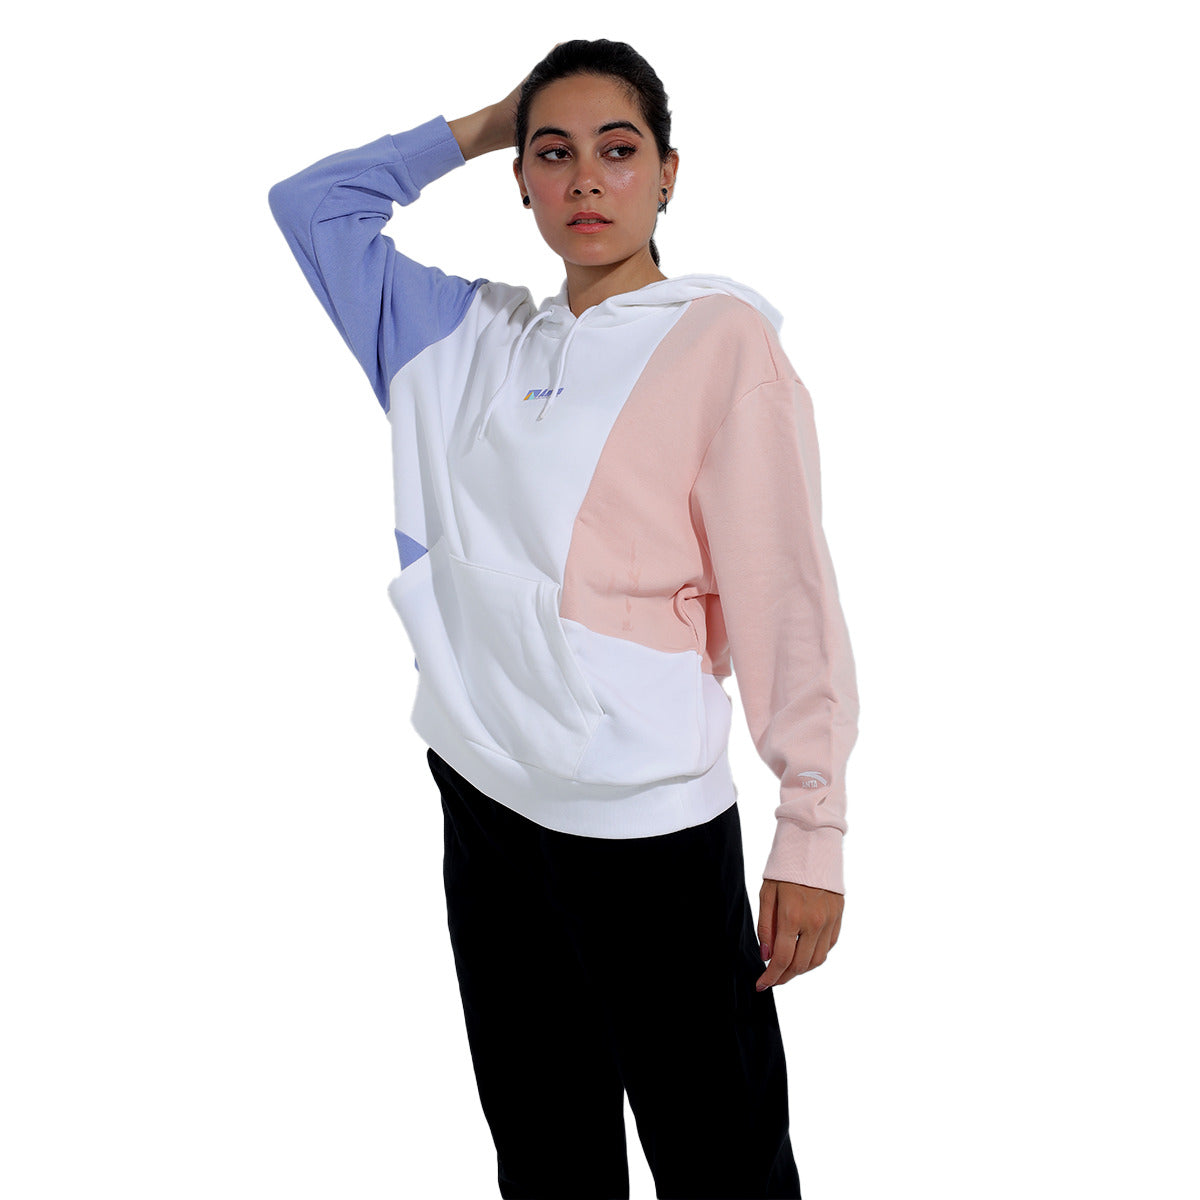 Anta Hooded Sweatshirt For Women, Pink, Blue & White